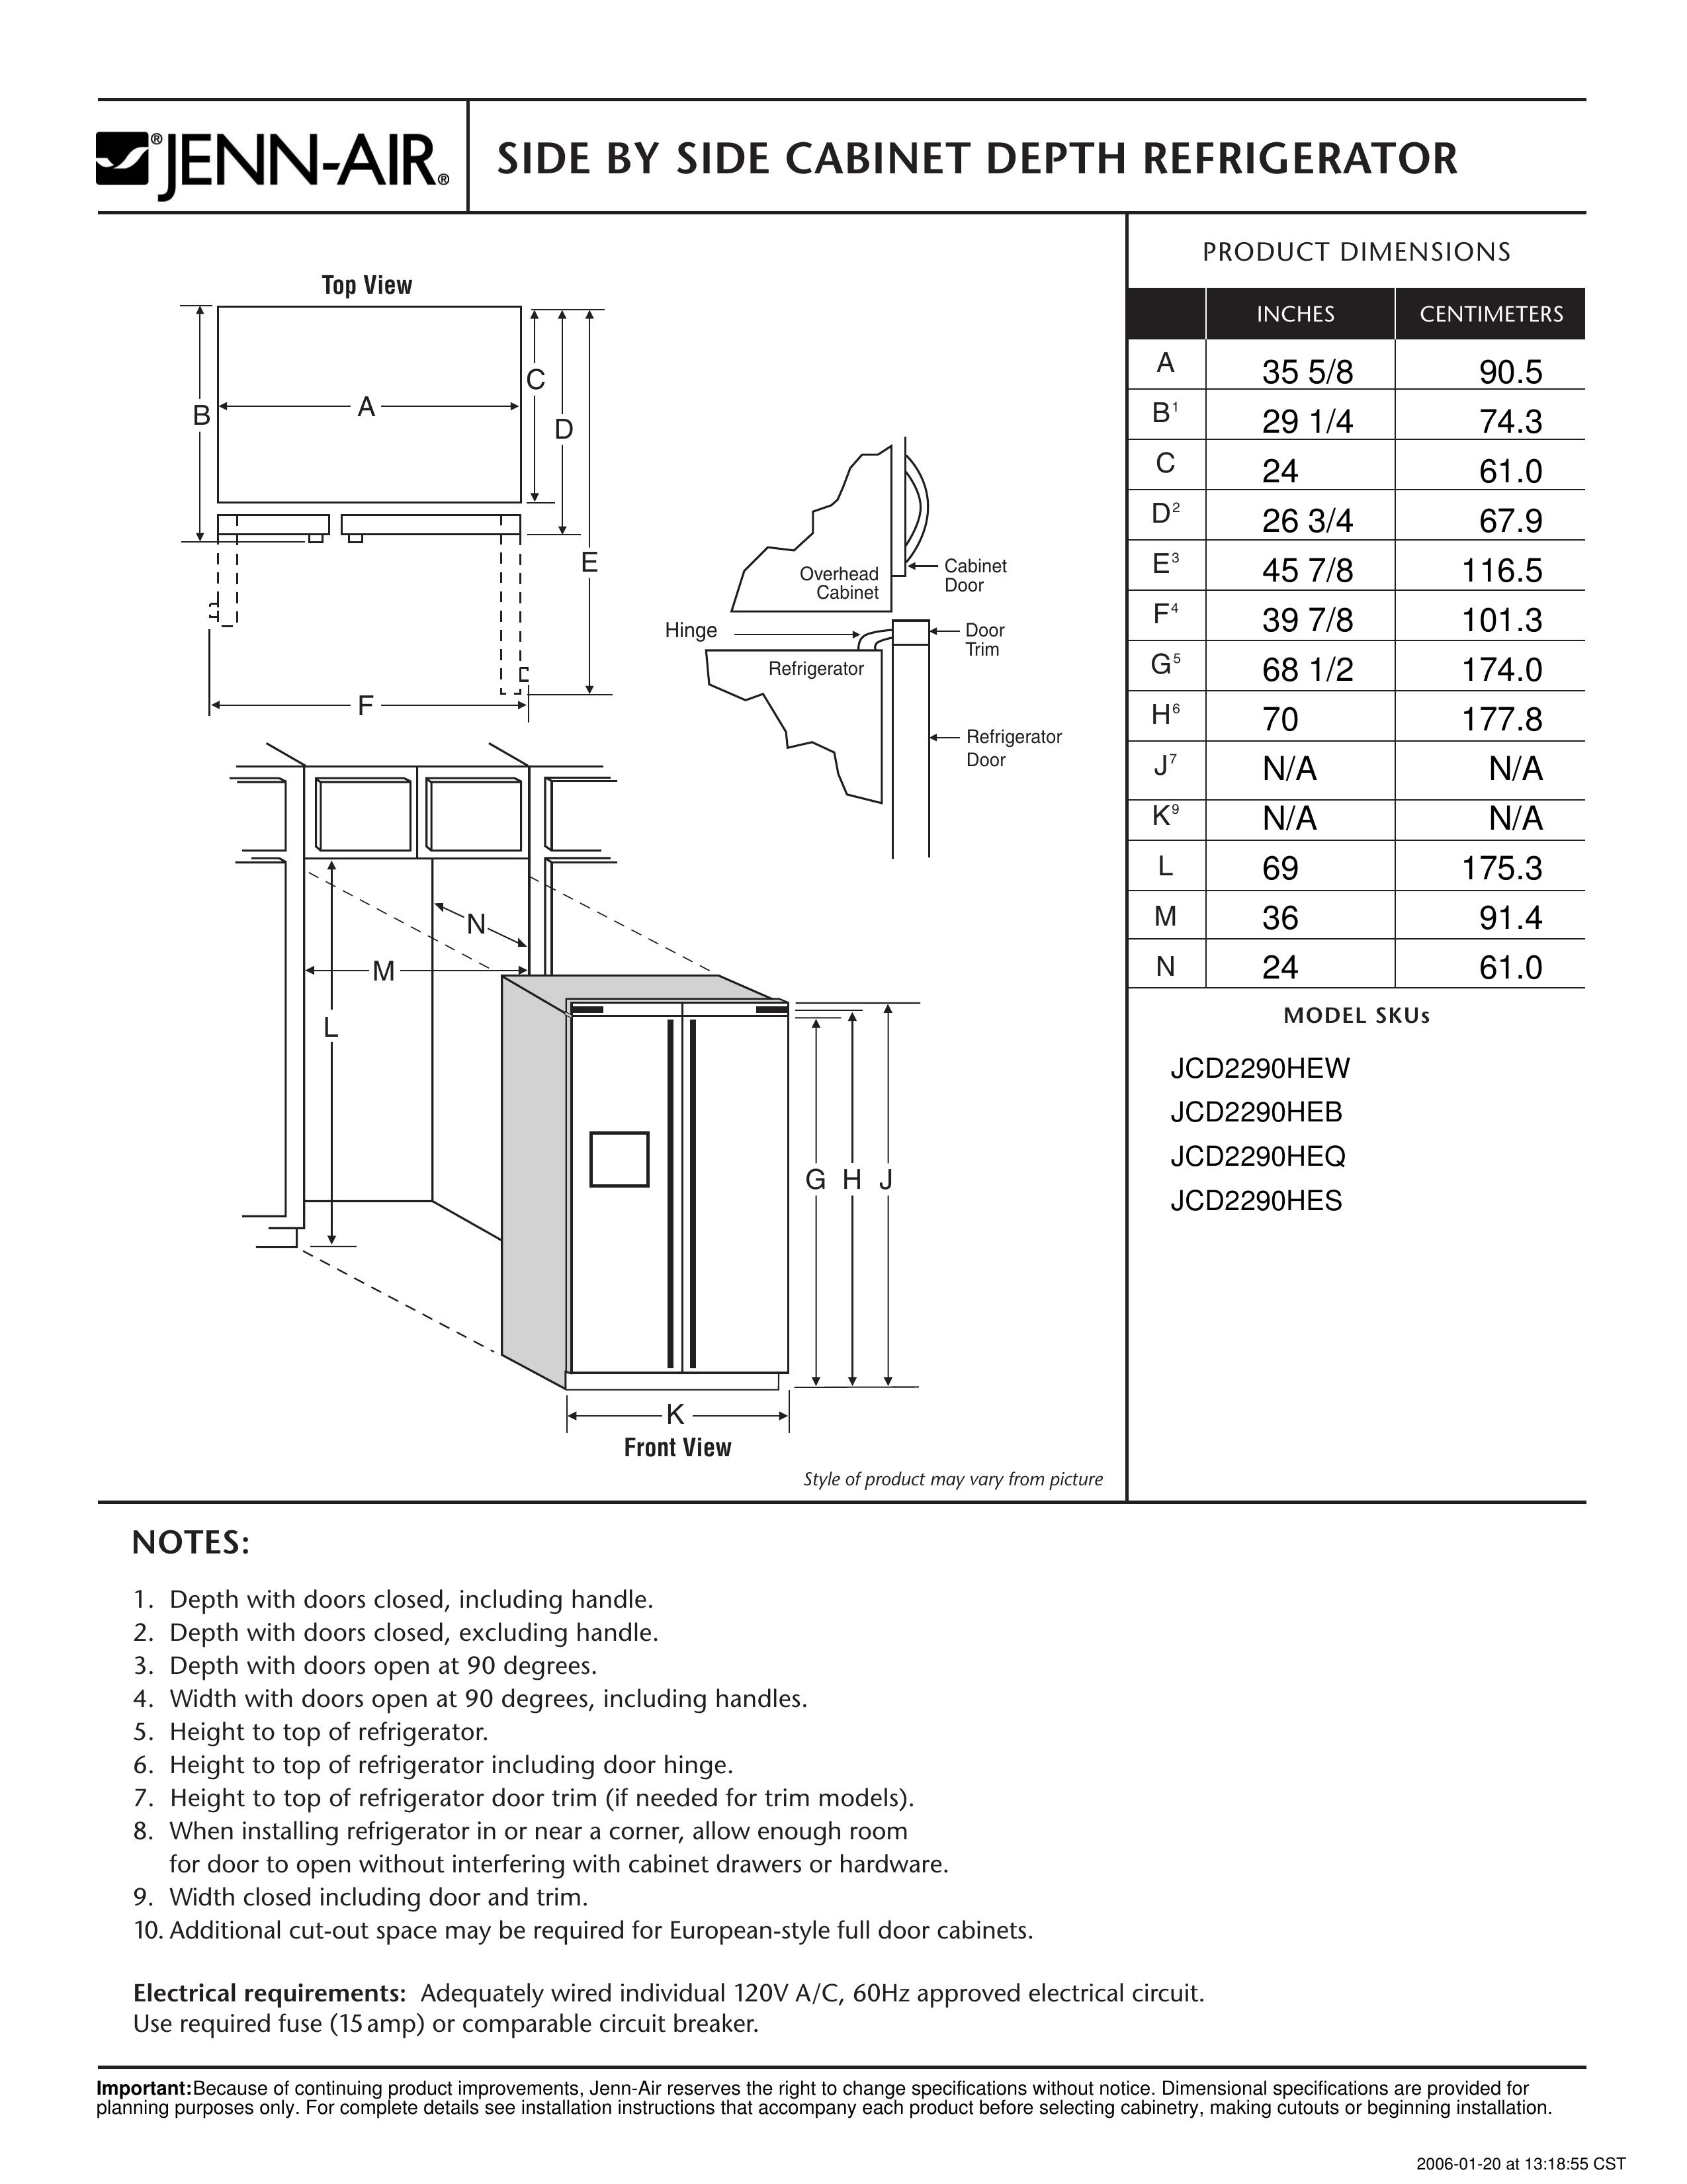 Jenn-Air JCD2290HEW Refrigerator User Manual